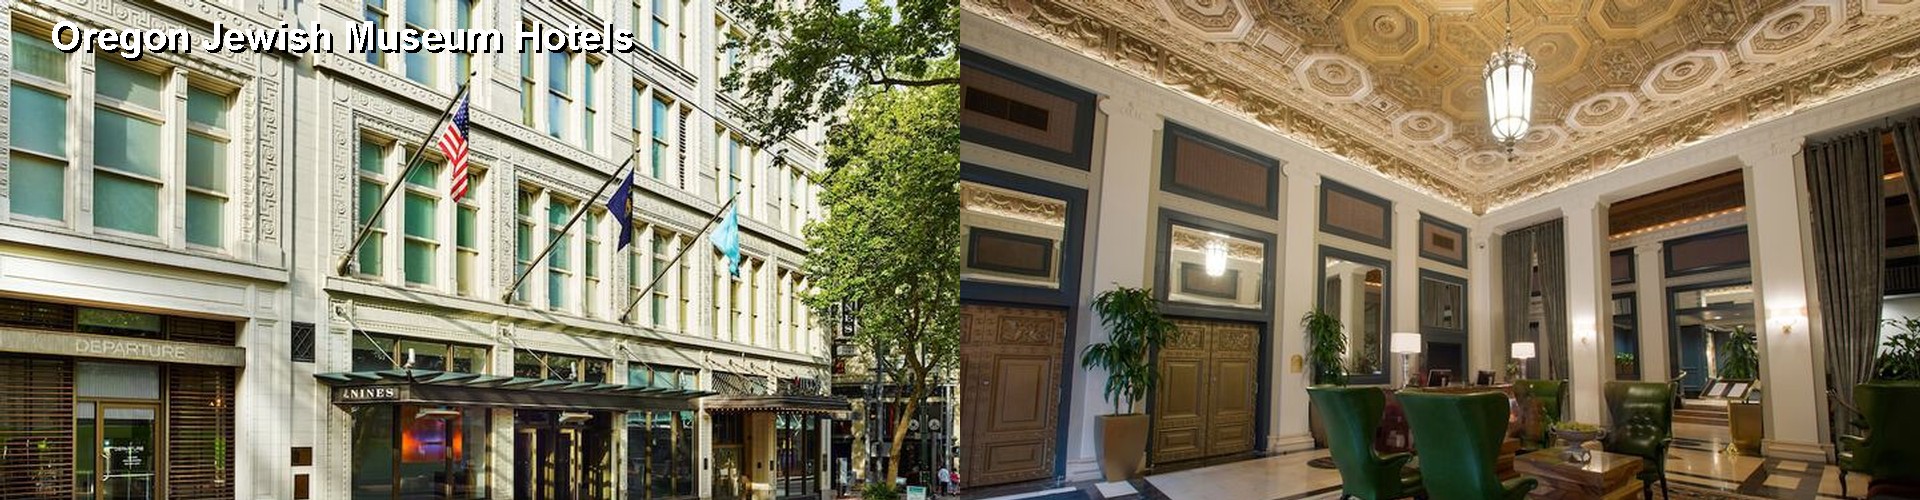 5 Best Hotels near Oregon Jewish Museum